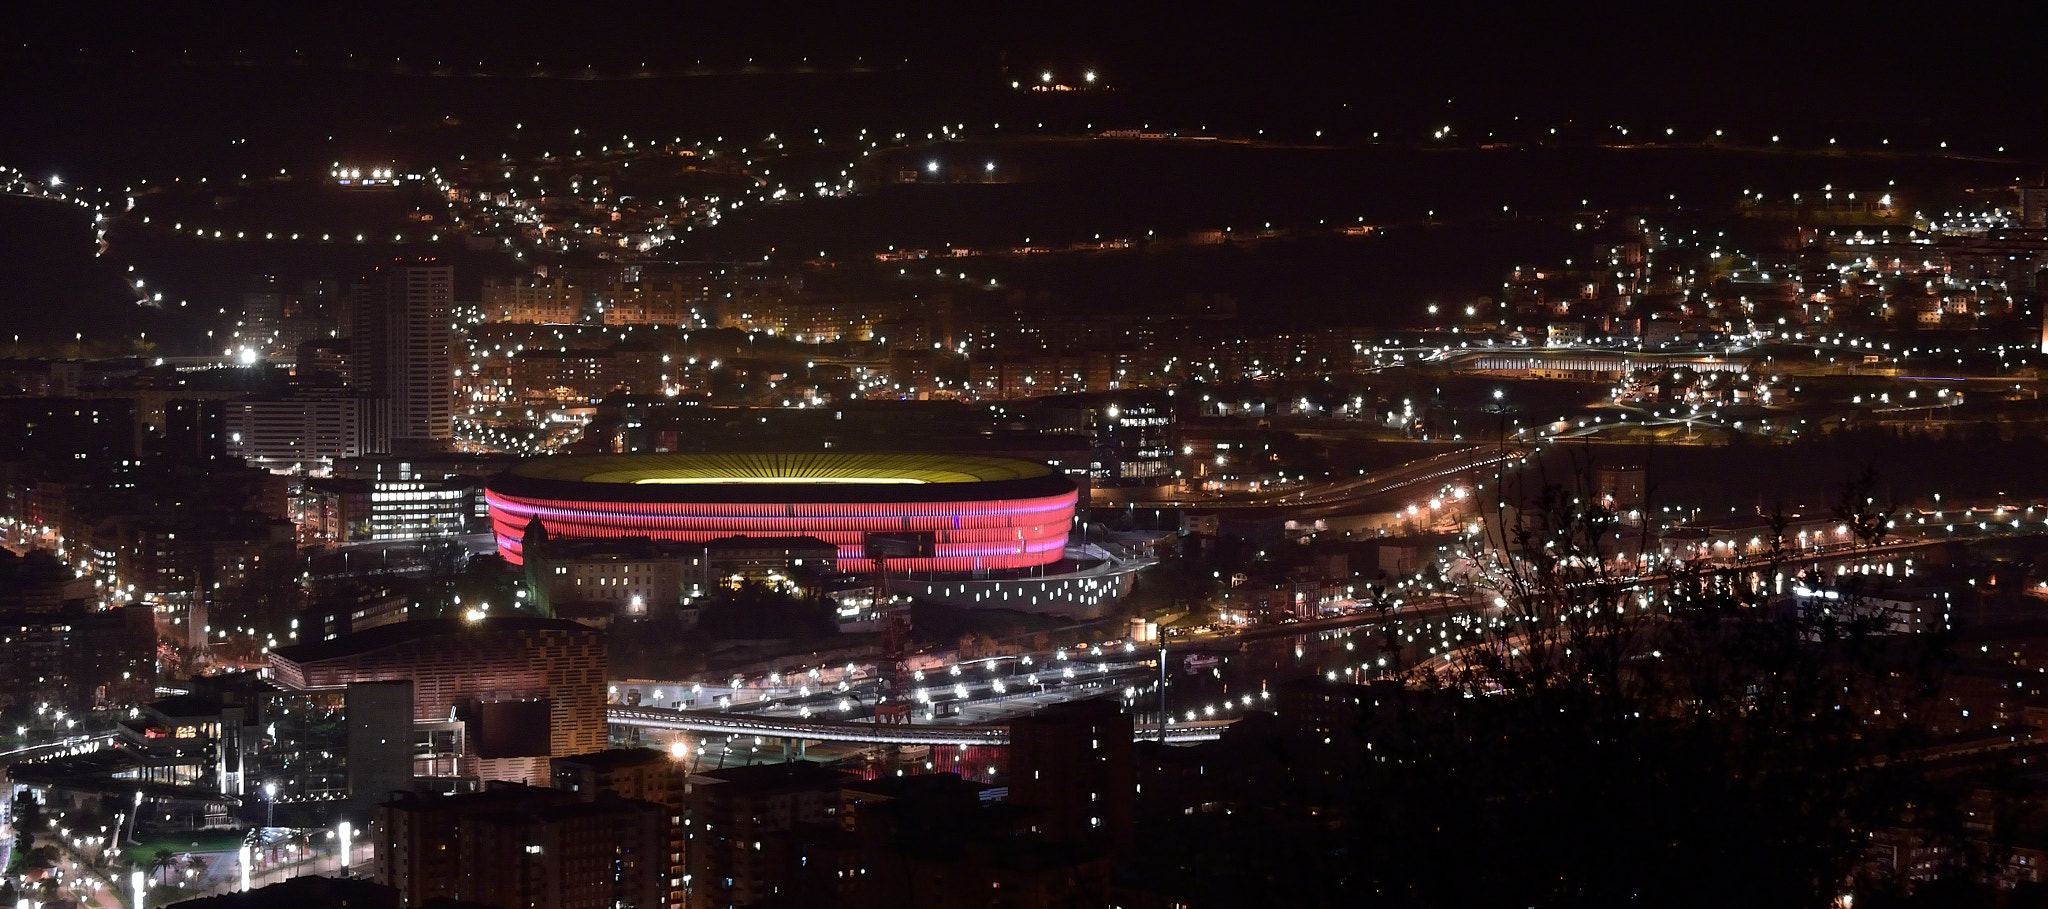 Bilbao and San Mamés stadium